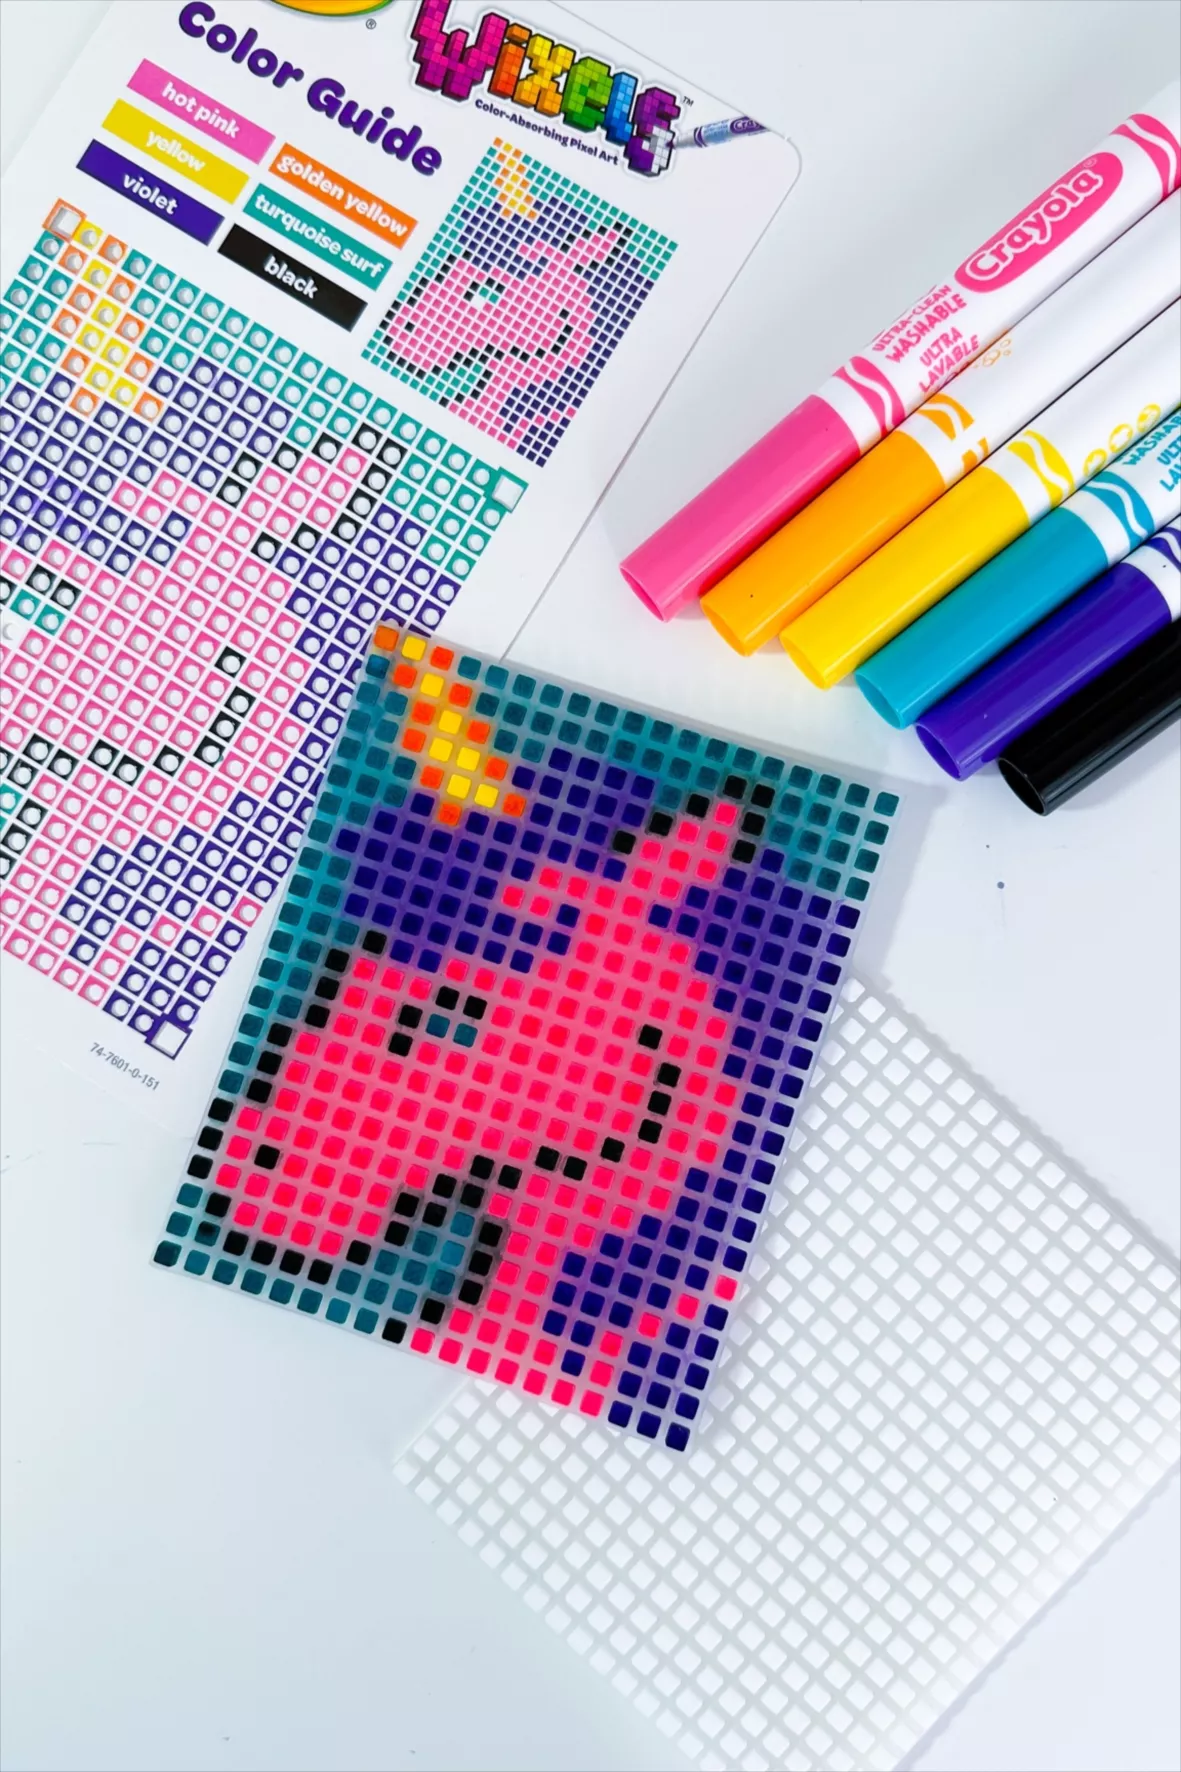 Crayola Wixels Unicorn Activity Kit, Pixel Art Coloring Set, Gift for Kids,  Ages 6, 7, 8, 9